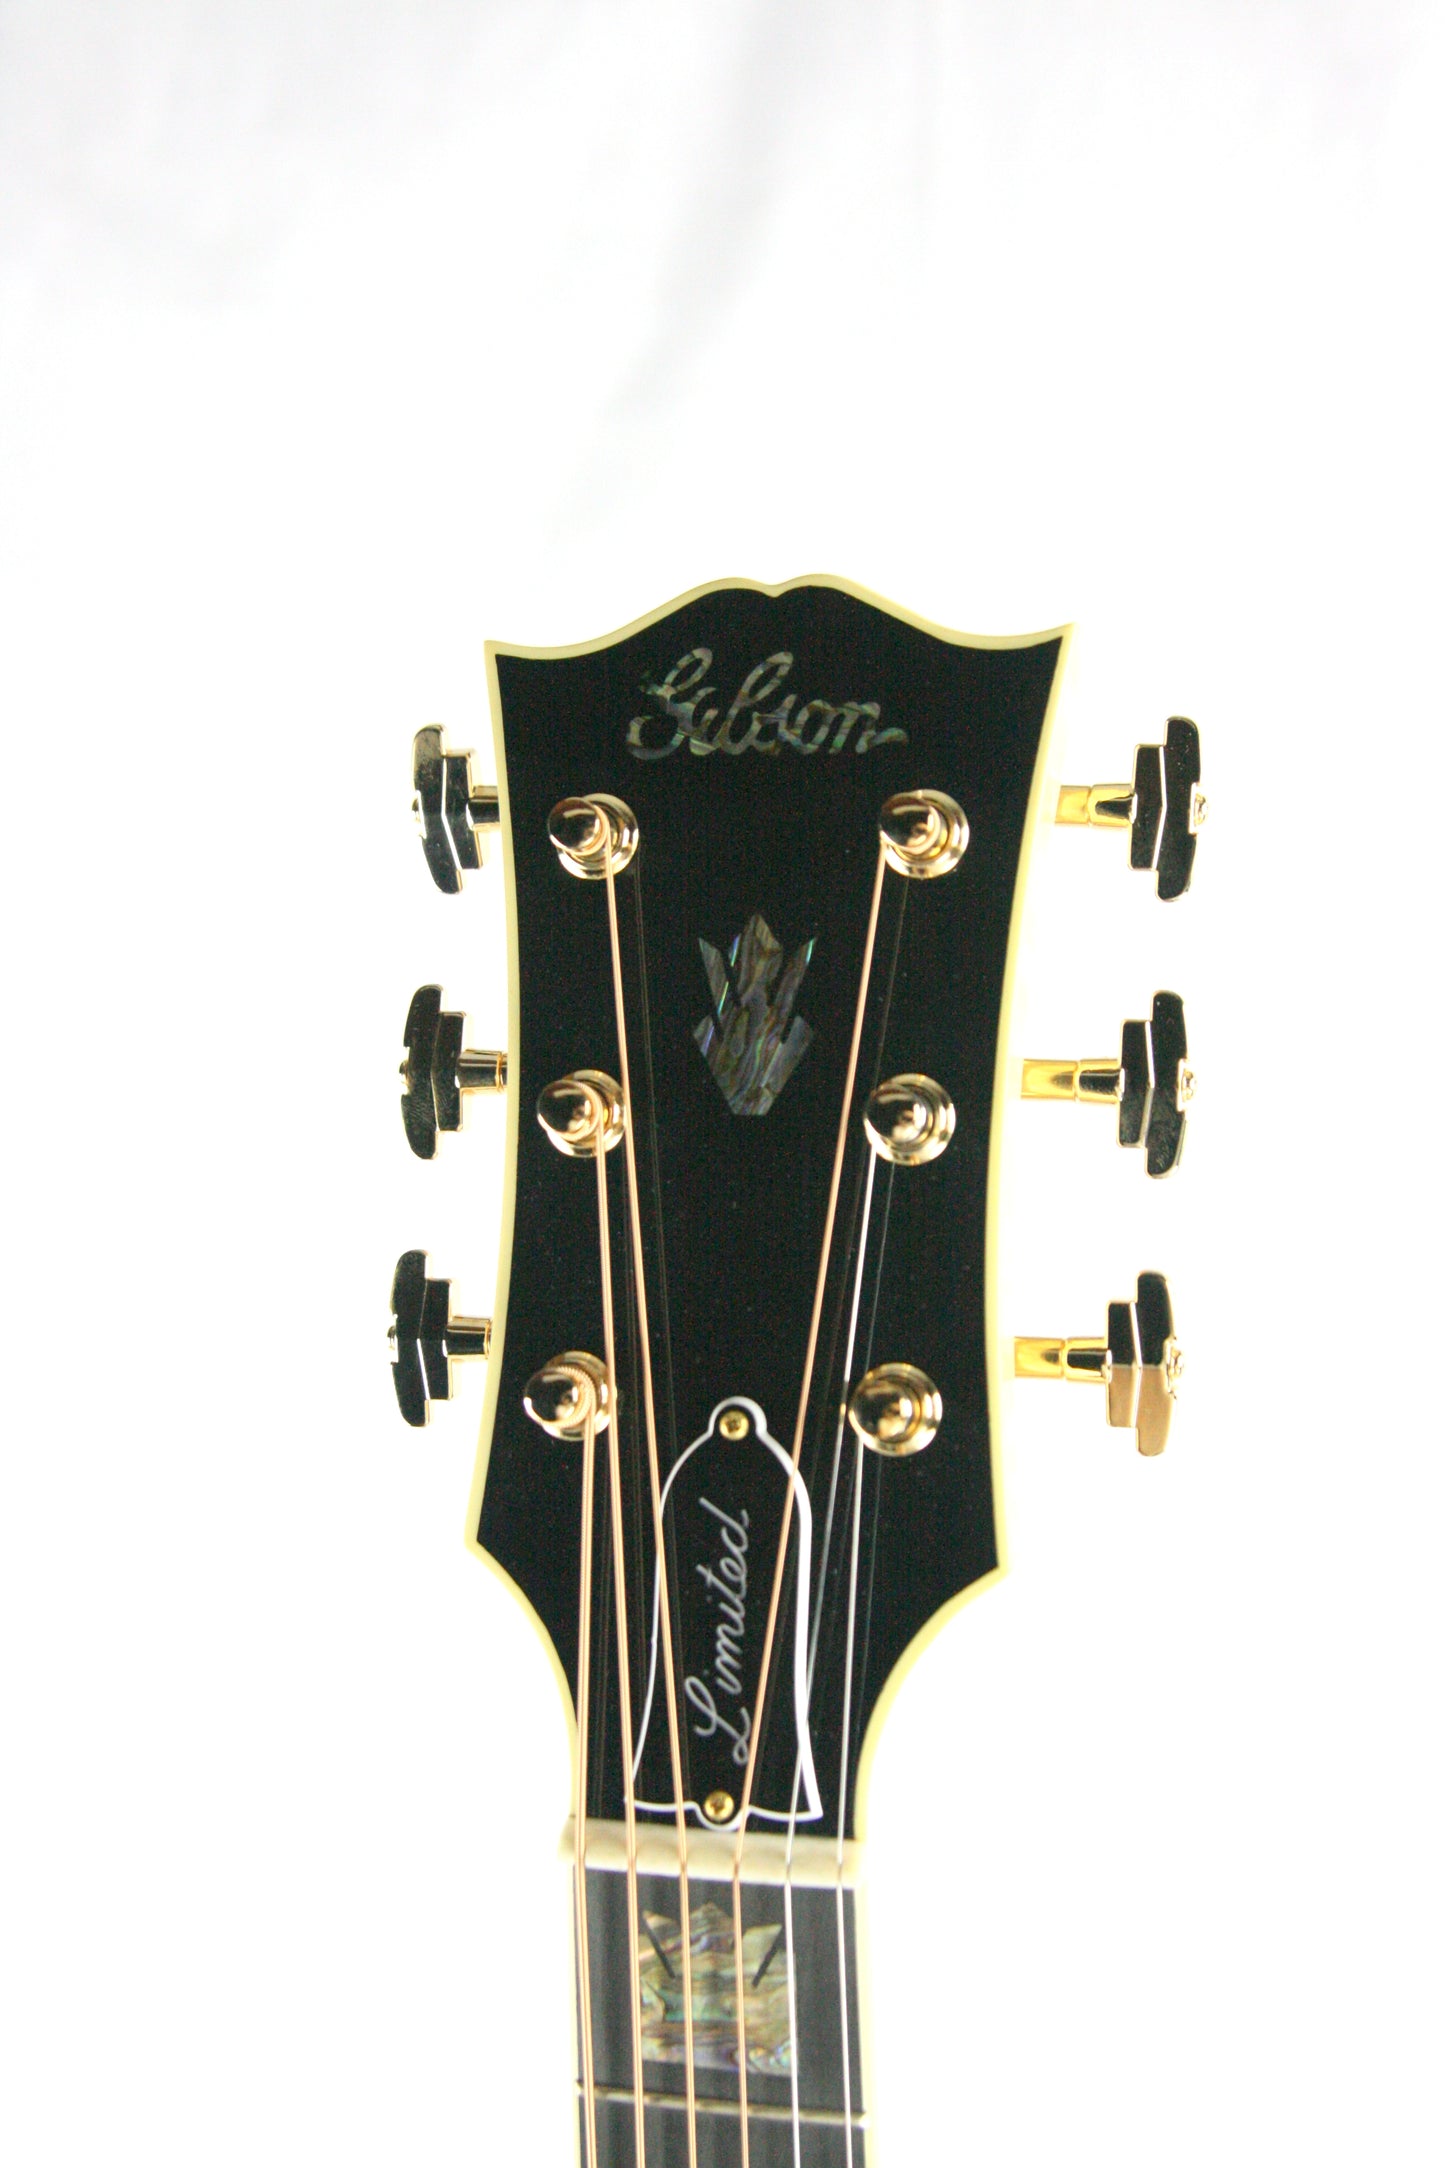 2017 Gibson Custom Shop SJ-200 KOA! Abalone, Limited Edition! j200 Acoustic Guitar j45